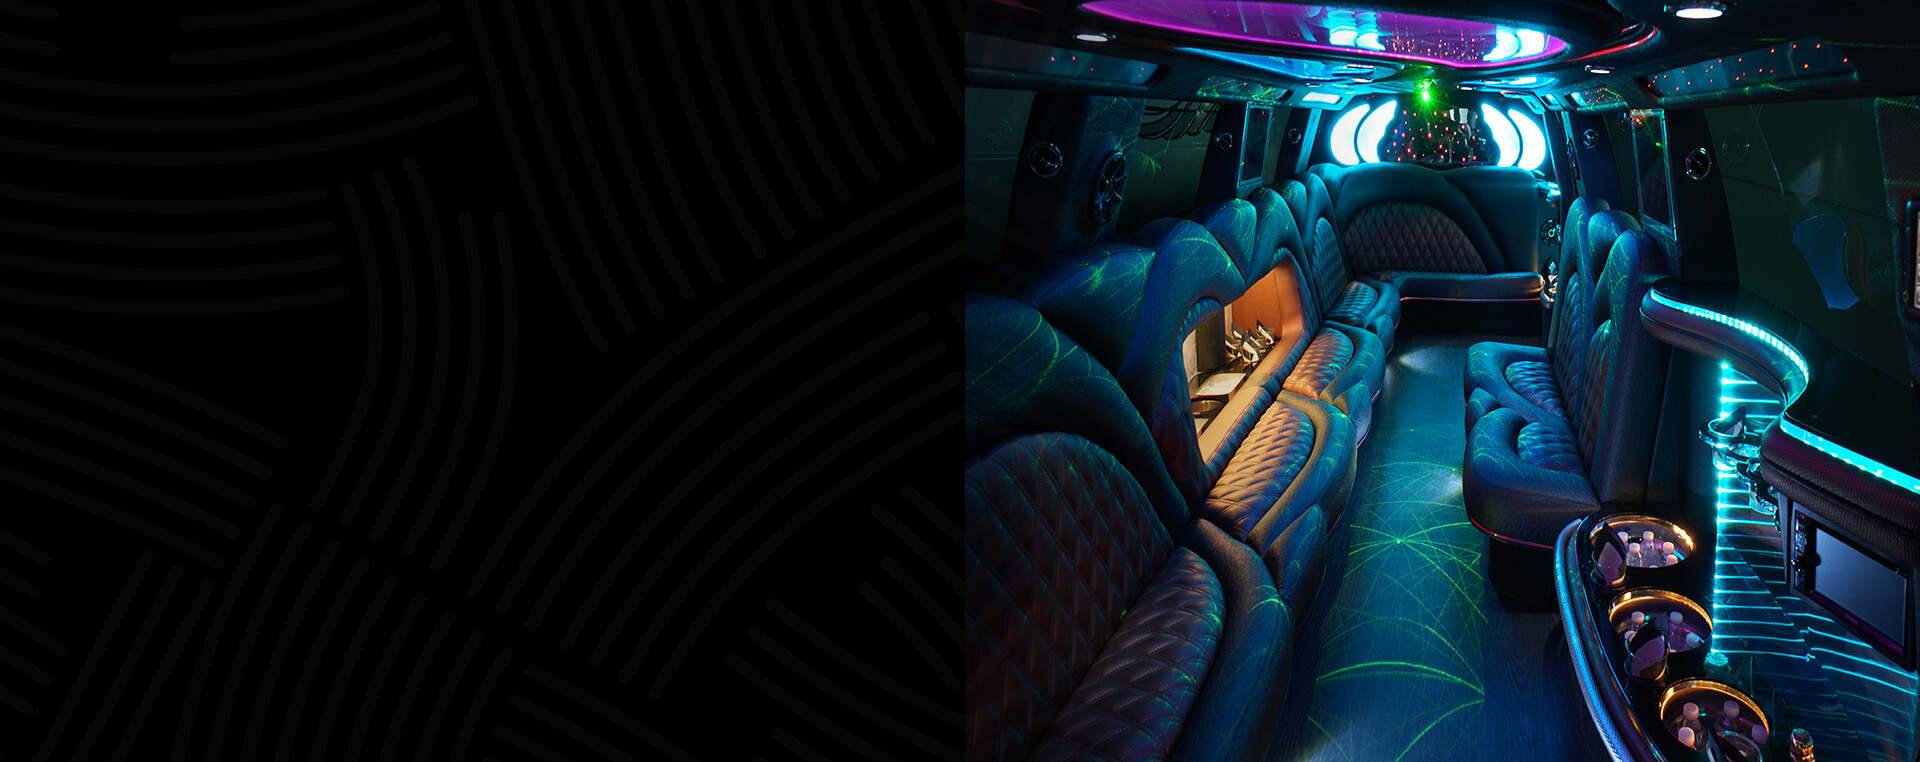 Unique Flint limo interior